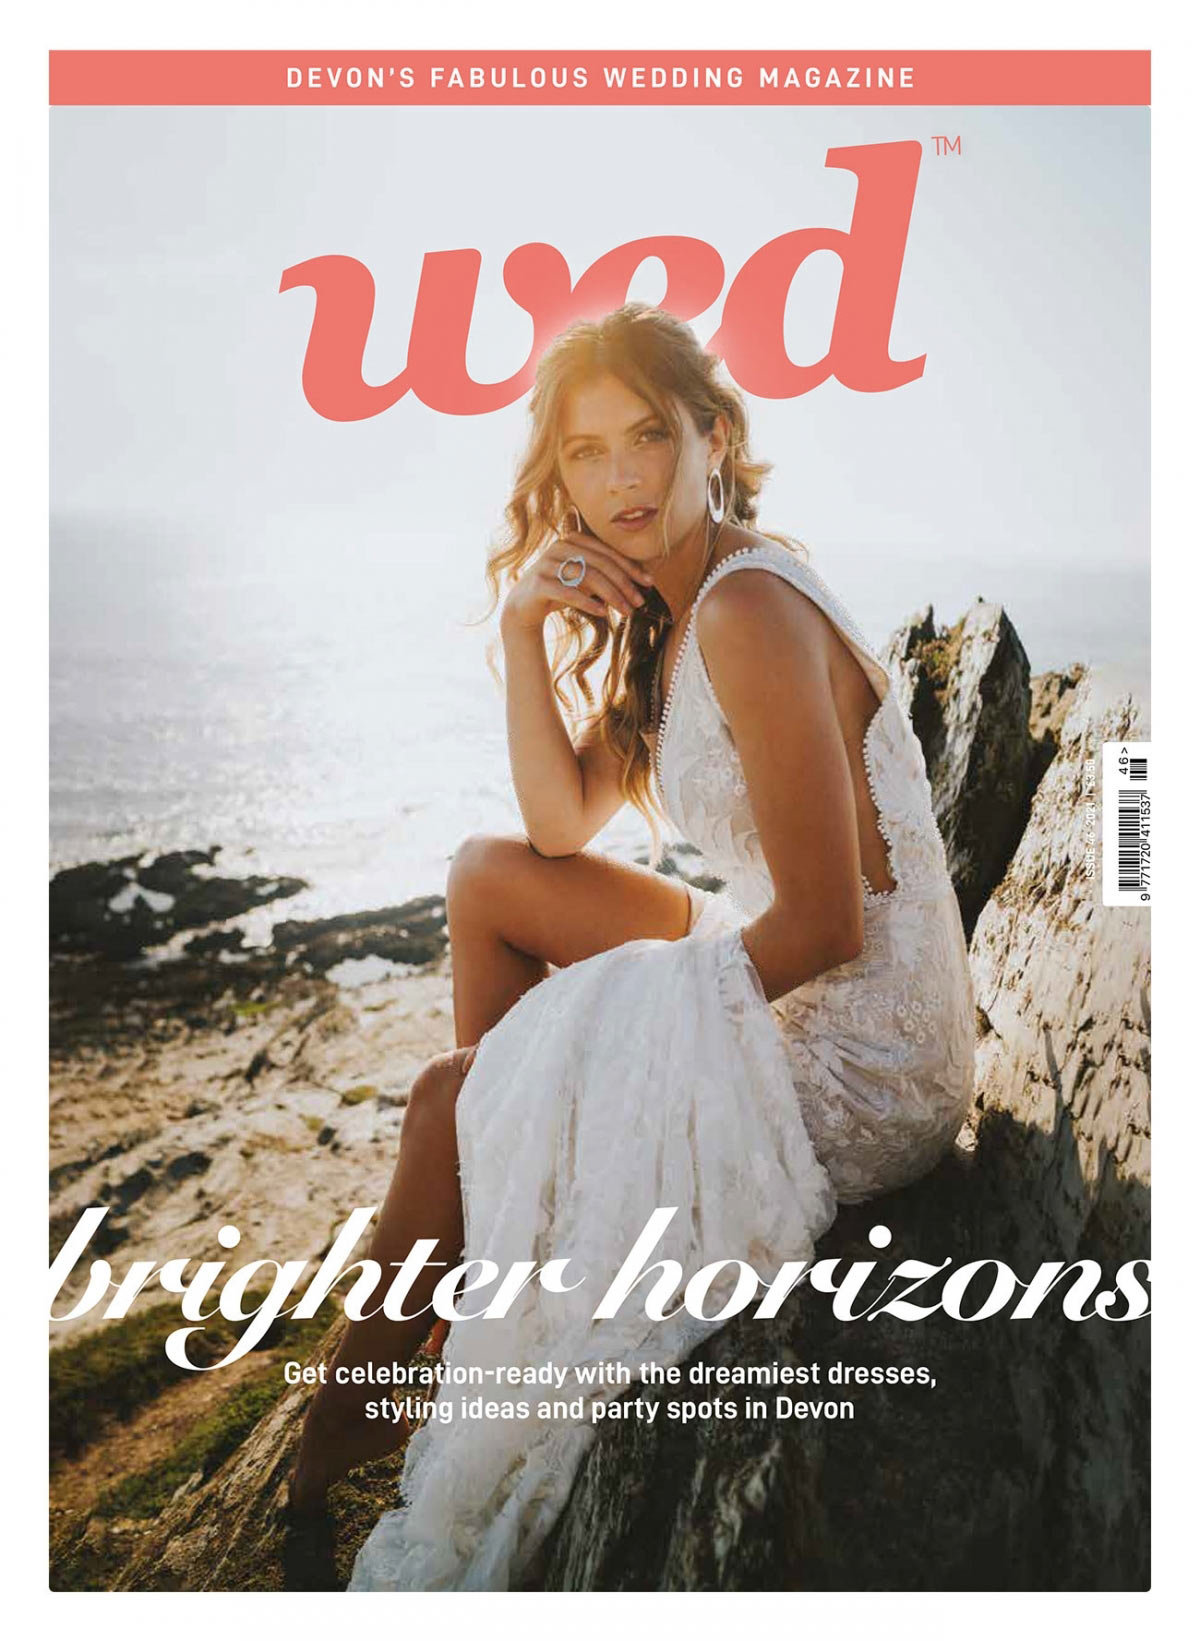 Order the new Devon issue of Wed Magazine!